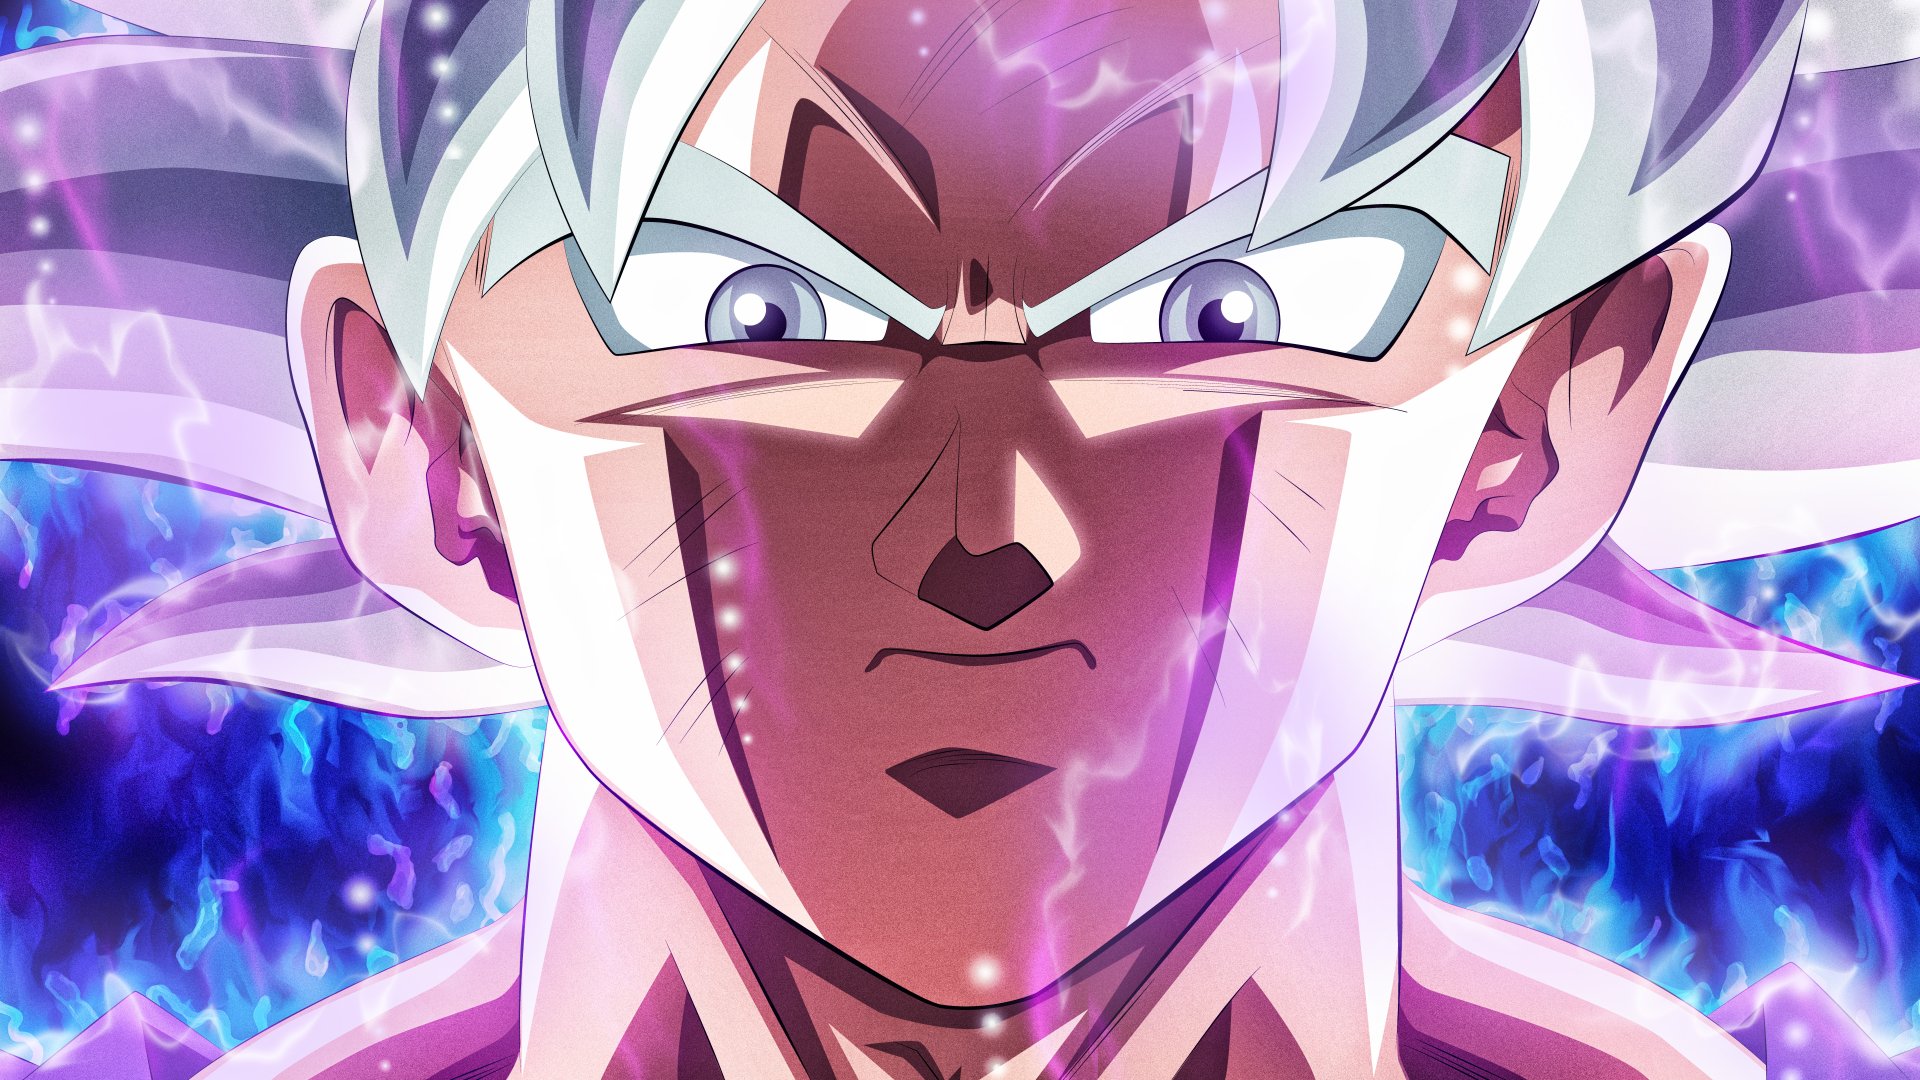 7680x4320 Dragon Ball Super - Goku Ultra Instict Wallpaper Background Image...